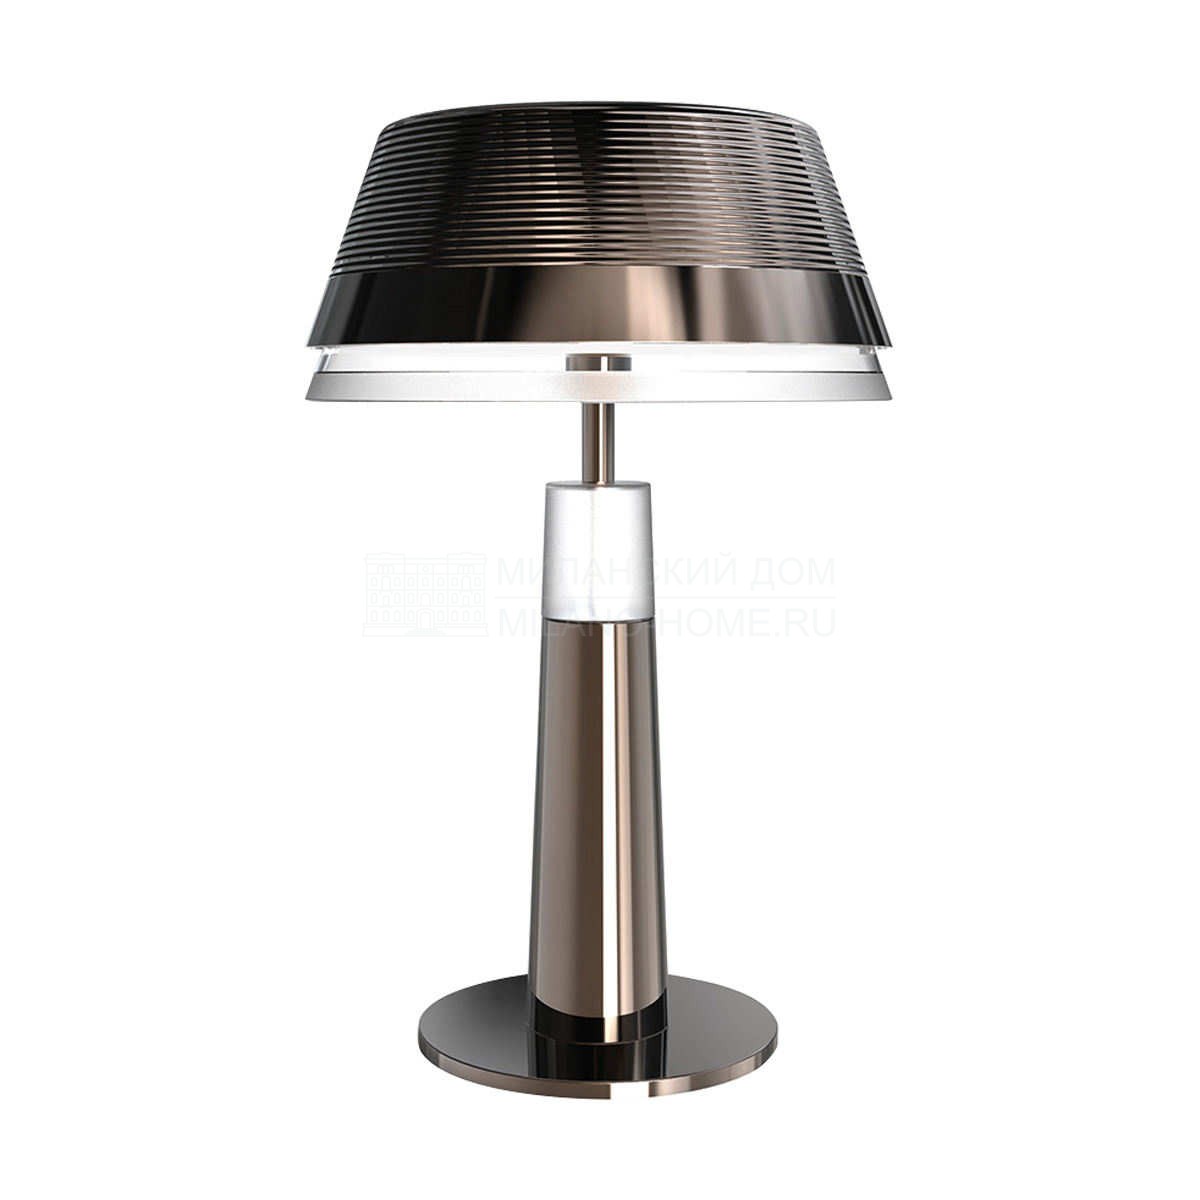 Настольная лампа Astra из Италии фабрики IPE CAVALLI VISIONNAIRE